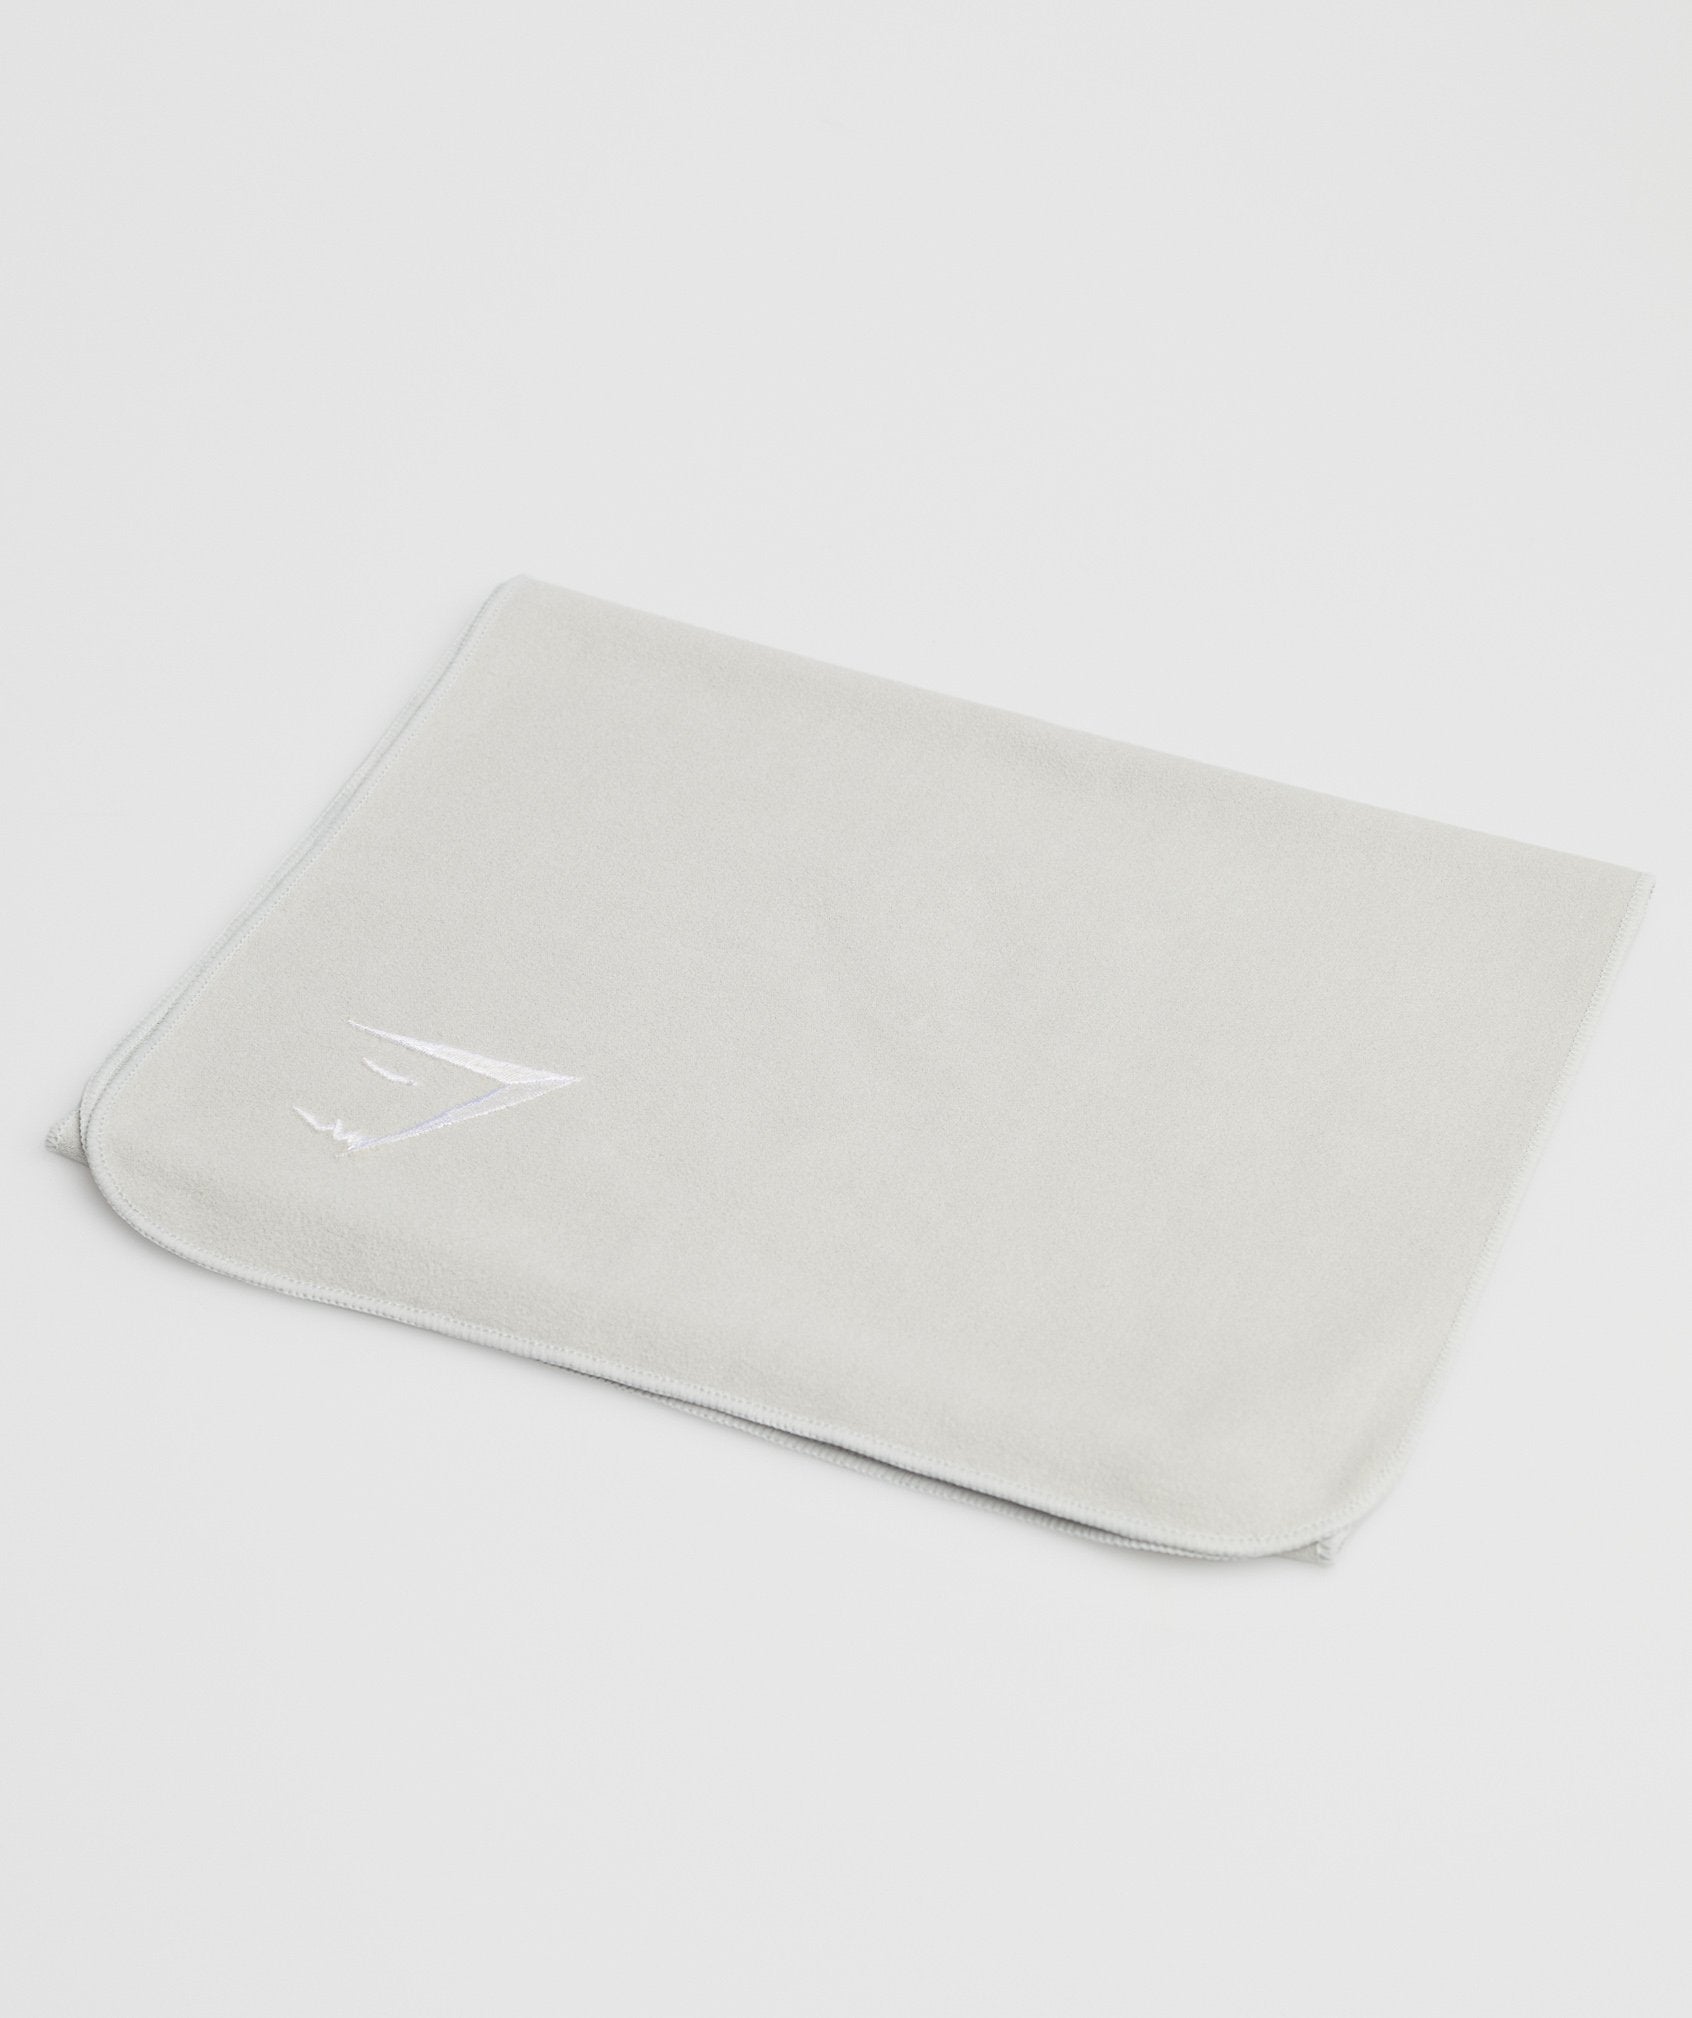 Sweat Towel in Light Grey - view 2